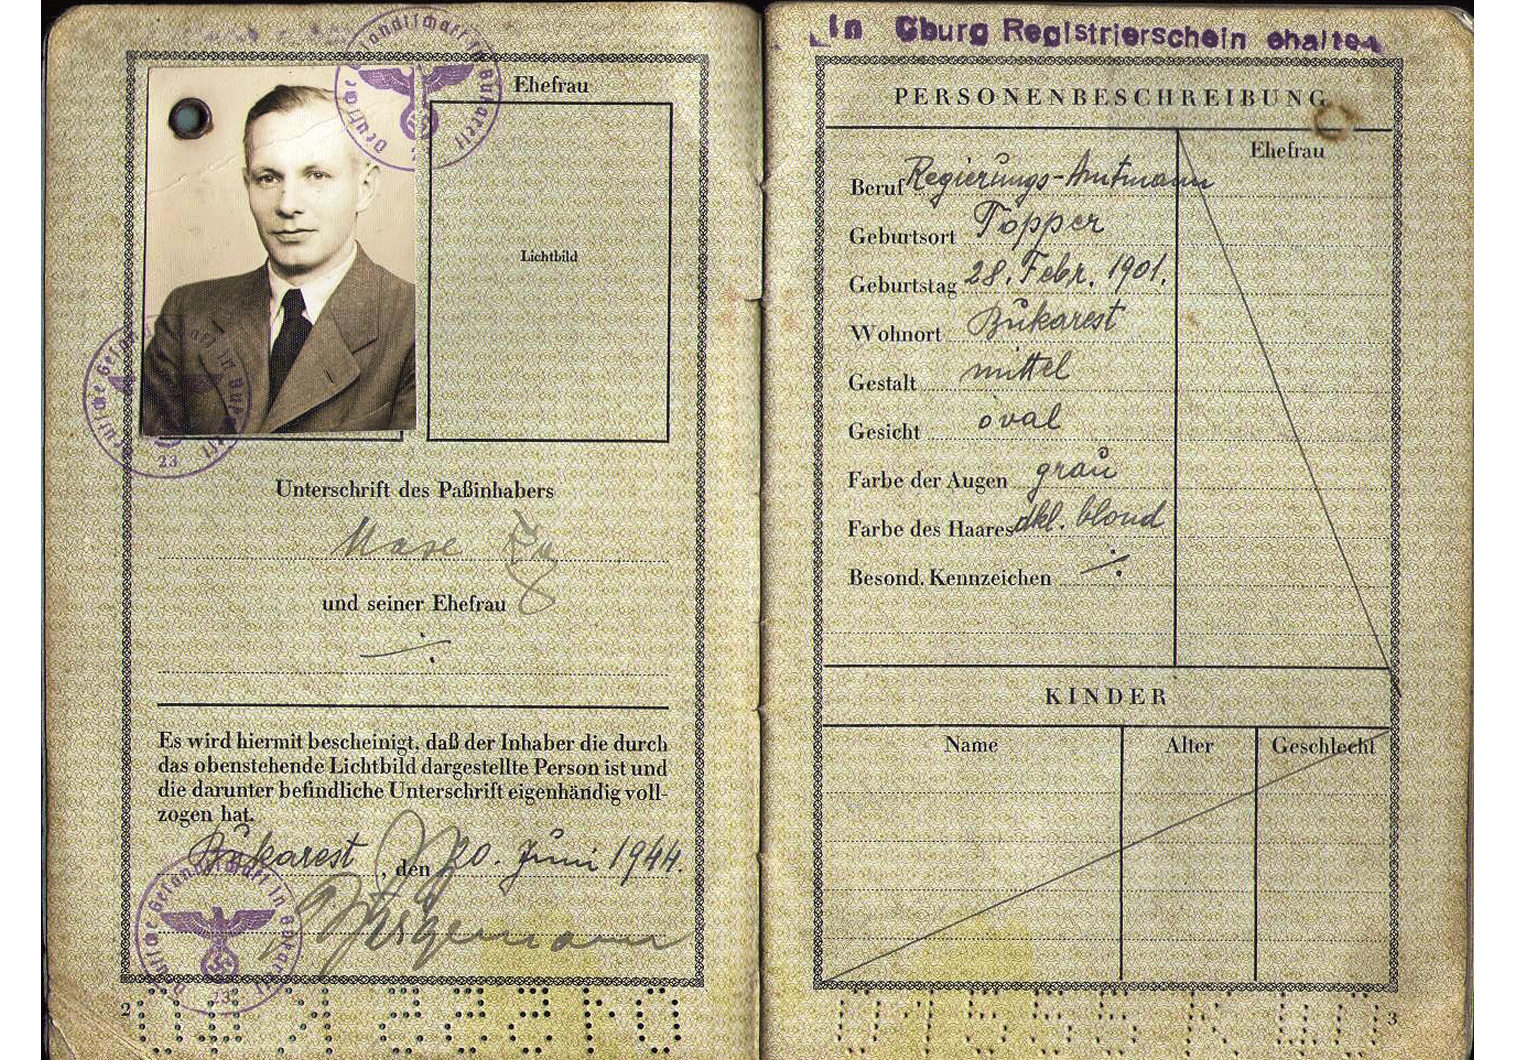 WW2 German Service Passport